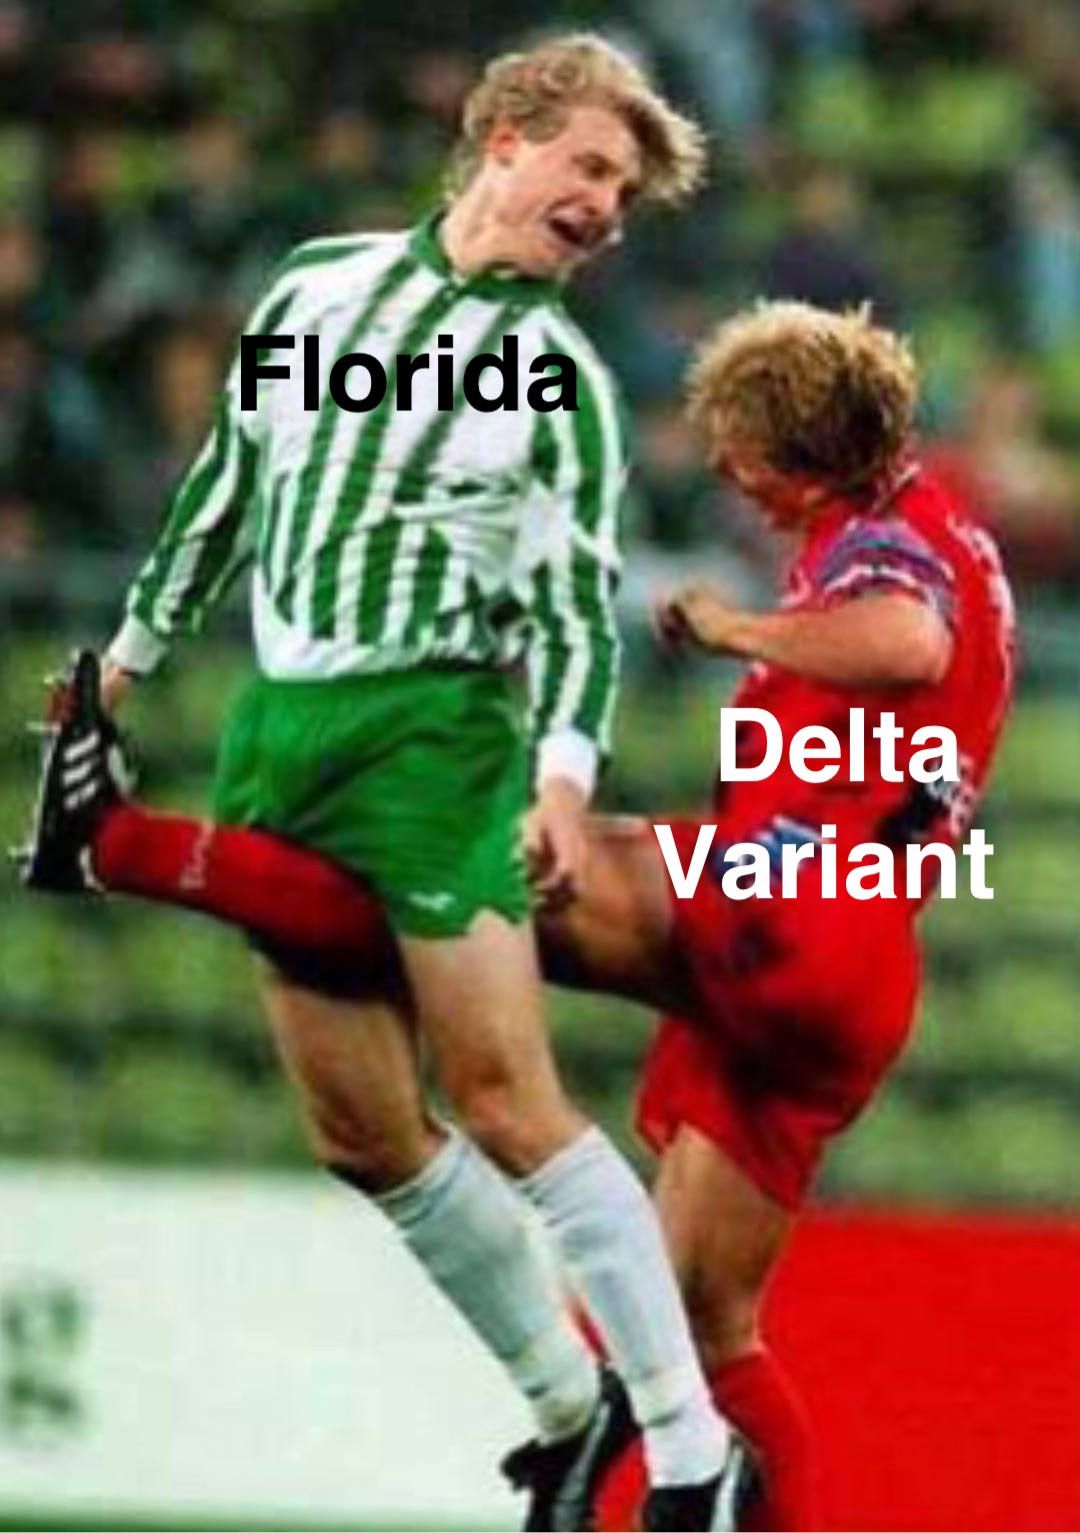 Florida Delta 
Variant